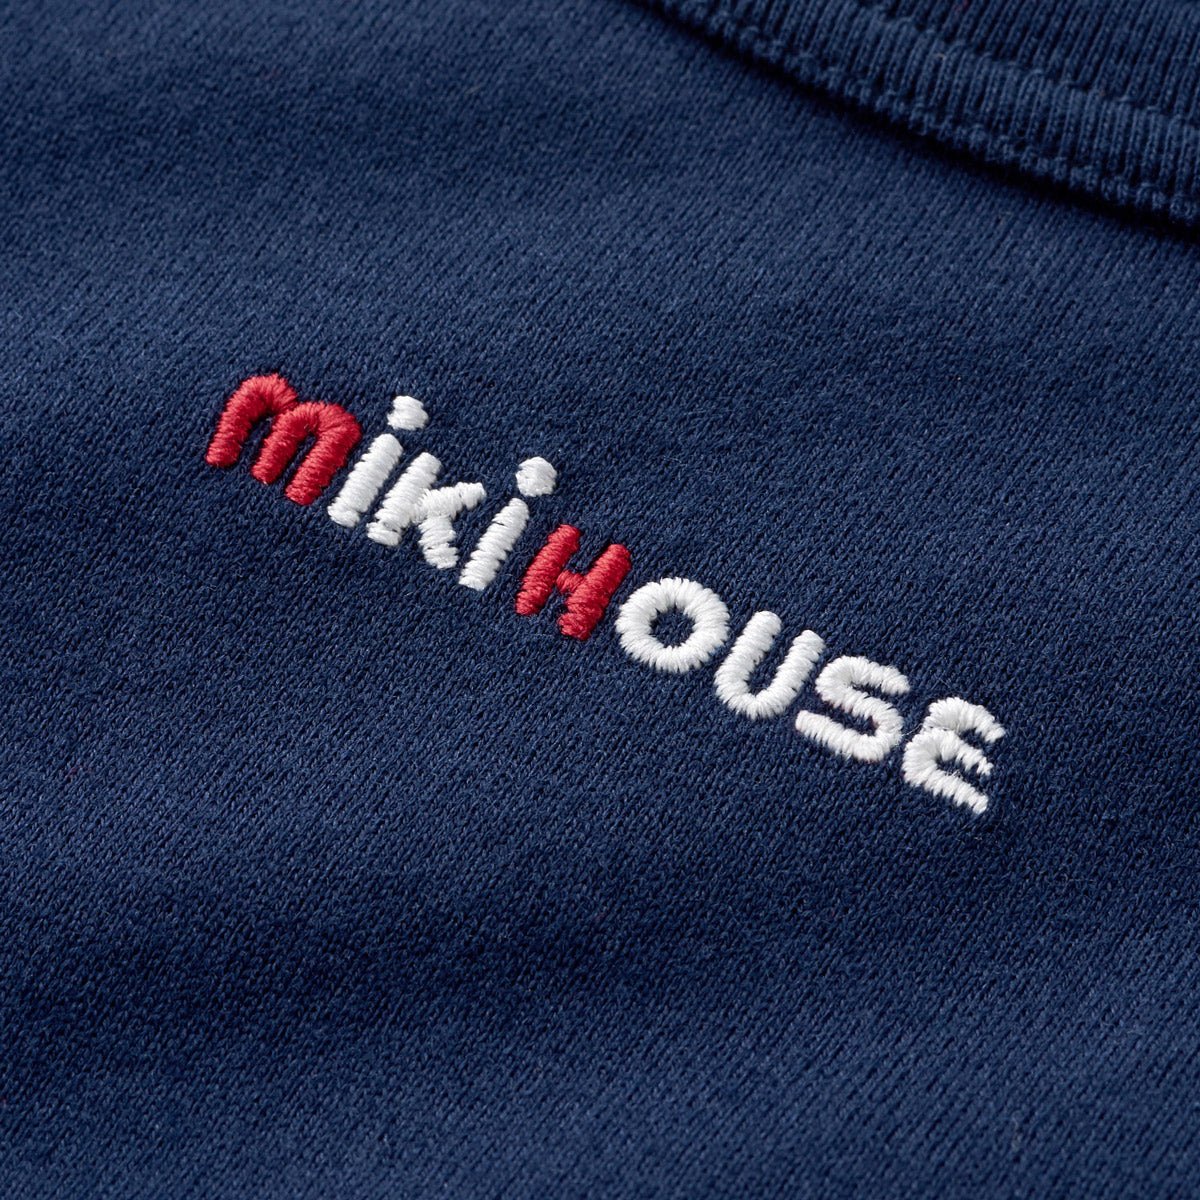 MIKI HOUSE Everyday Tee (Embroidery Logo) - 10-5205-458-03-80